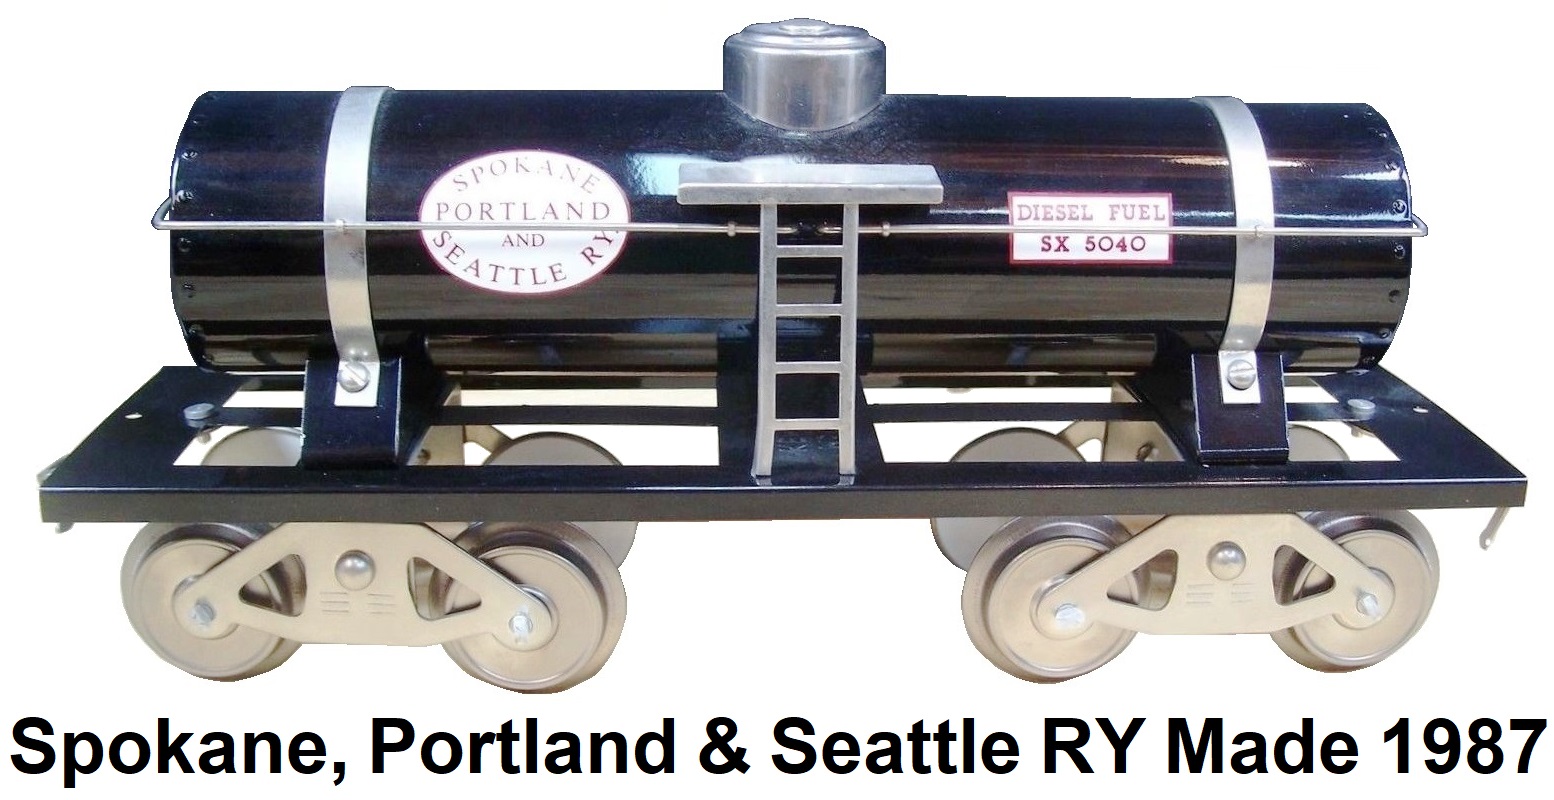 McCoy TTOS 1987 Standard gauge Spokane, Portland and Seattle RY Diesel Fuel SX 5040 single dome tank car all black